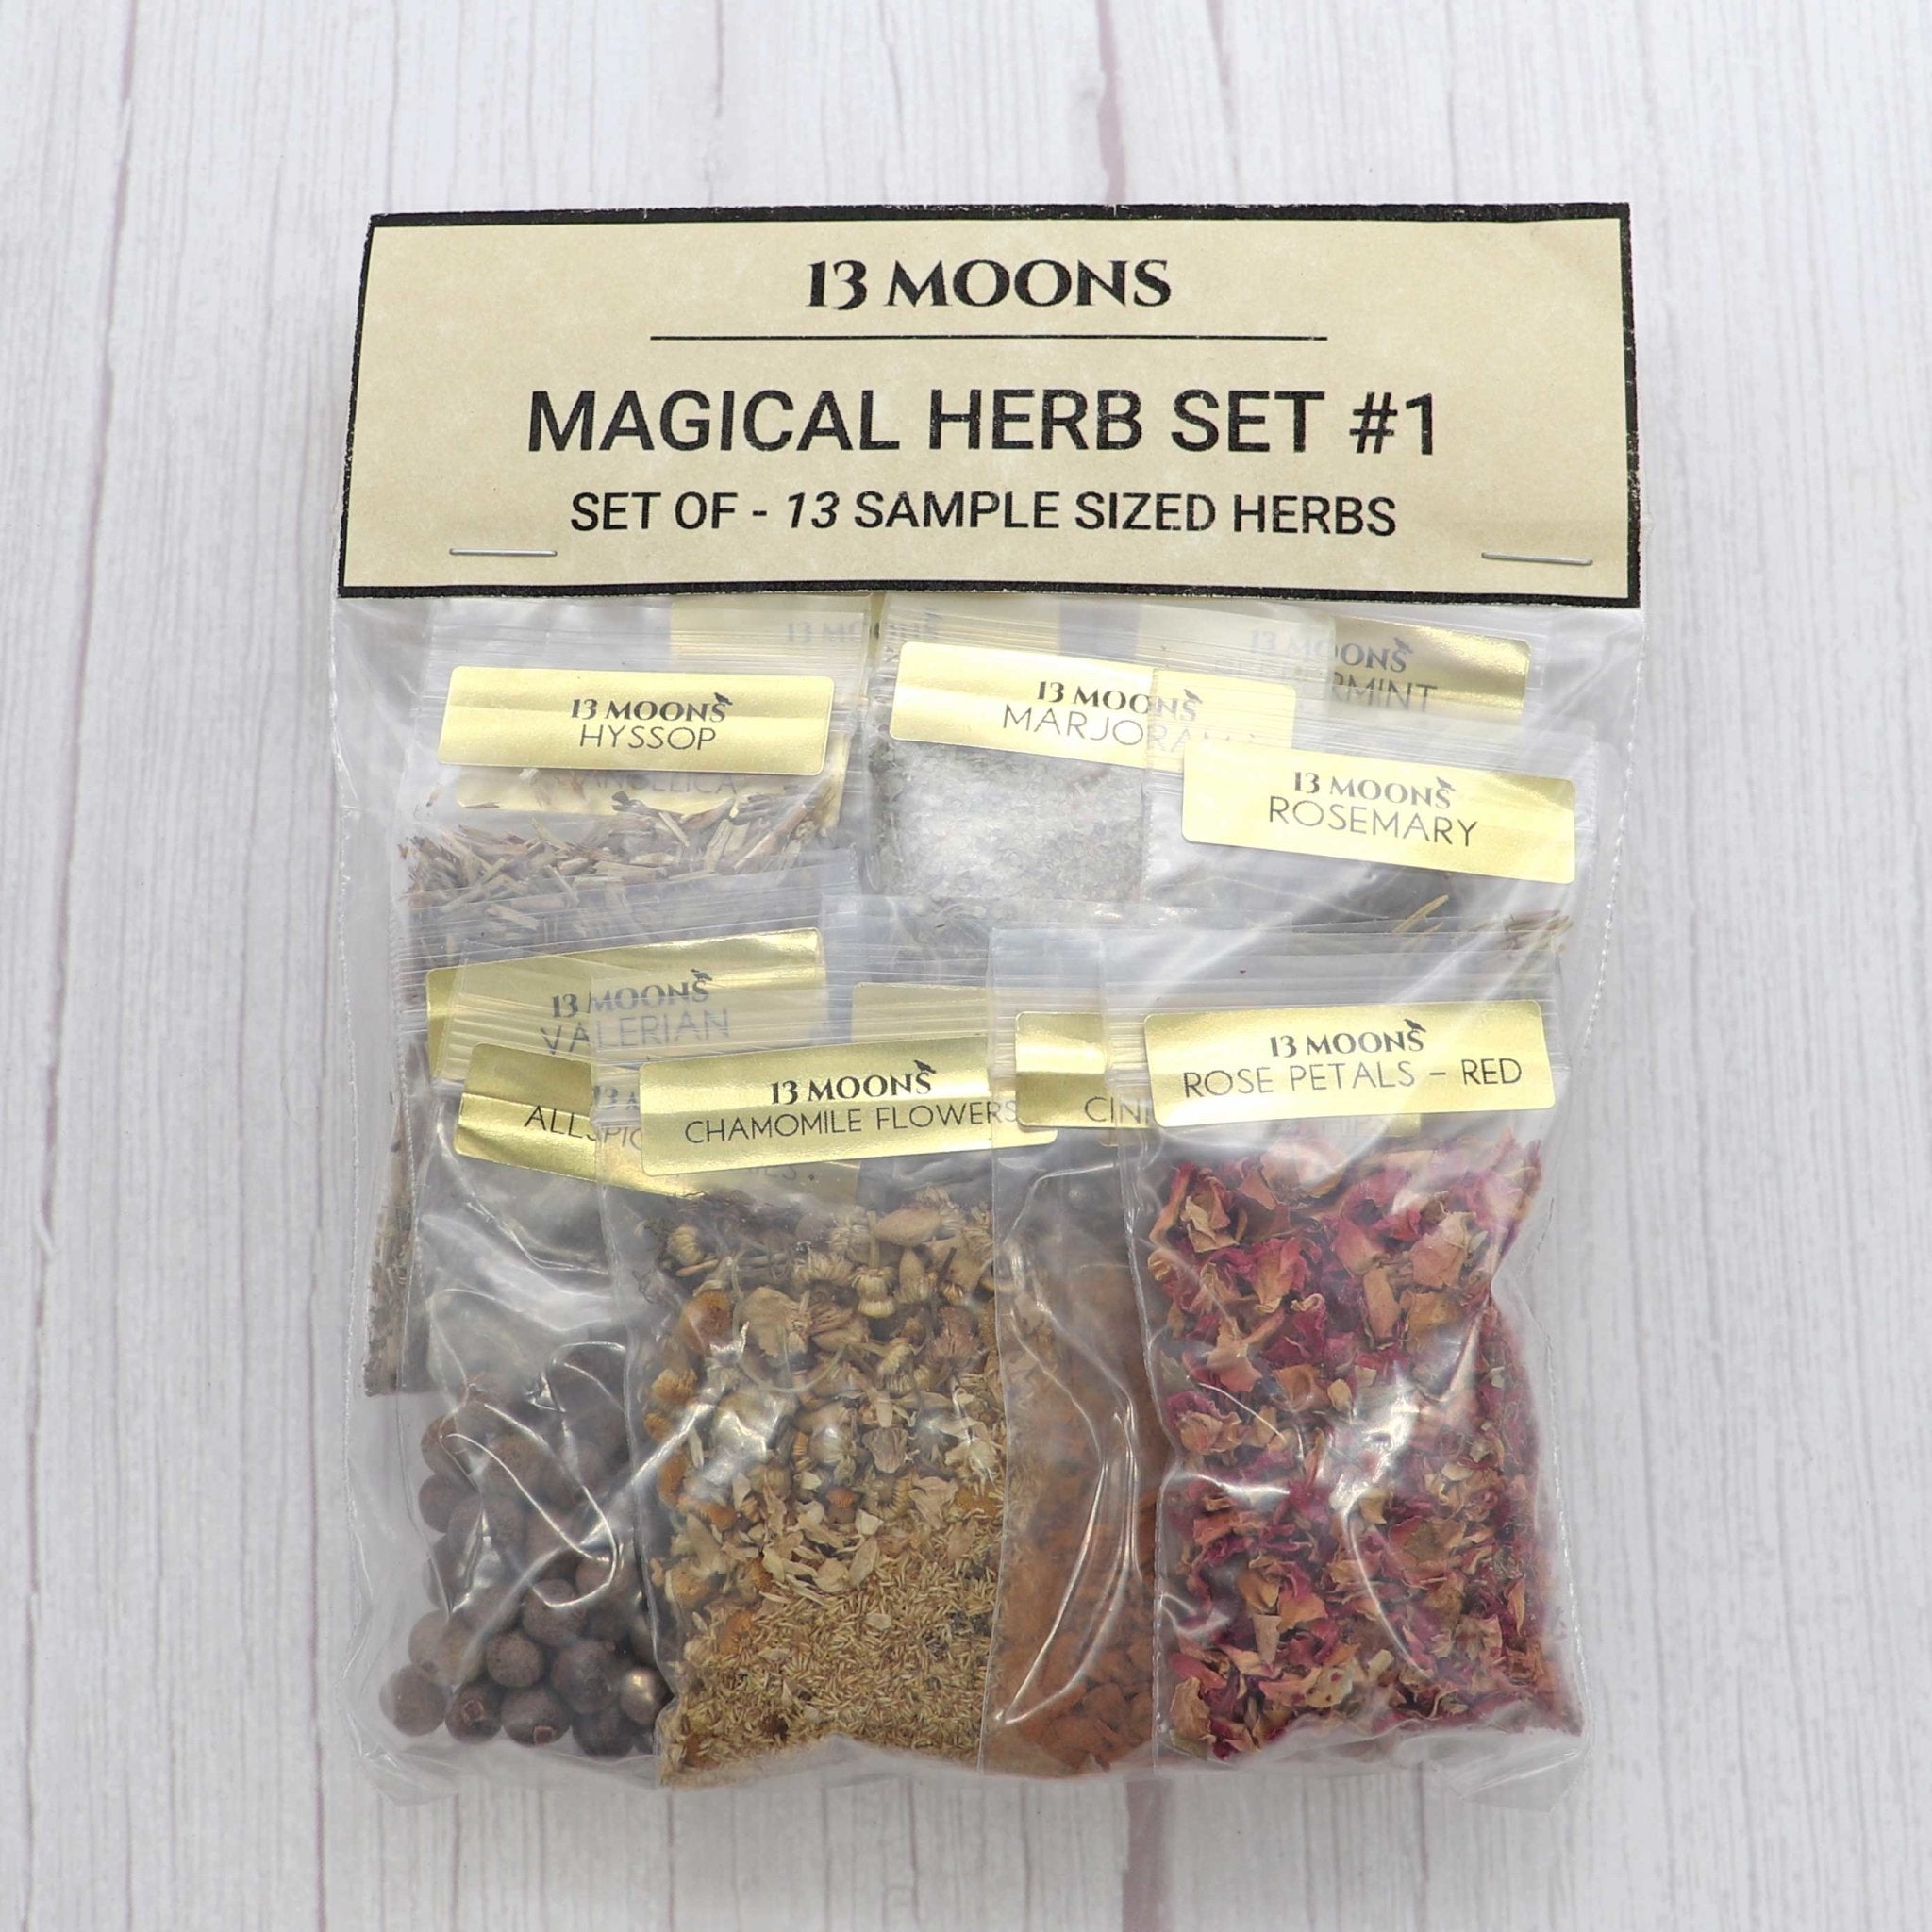 Magical Herb Set #1 - 13 Moons